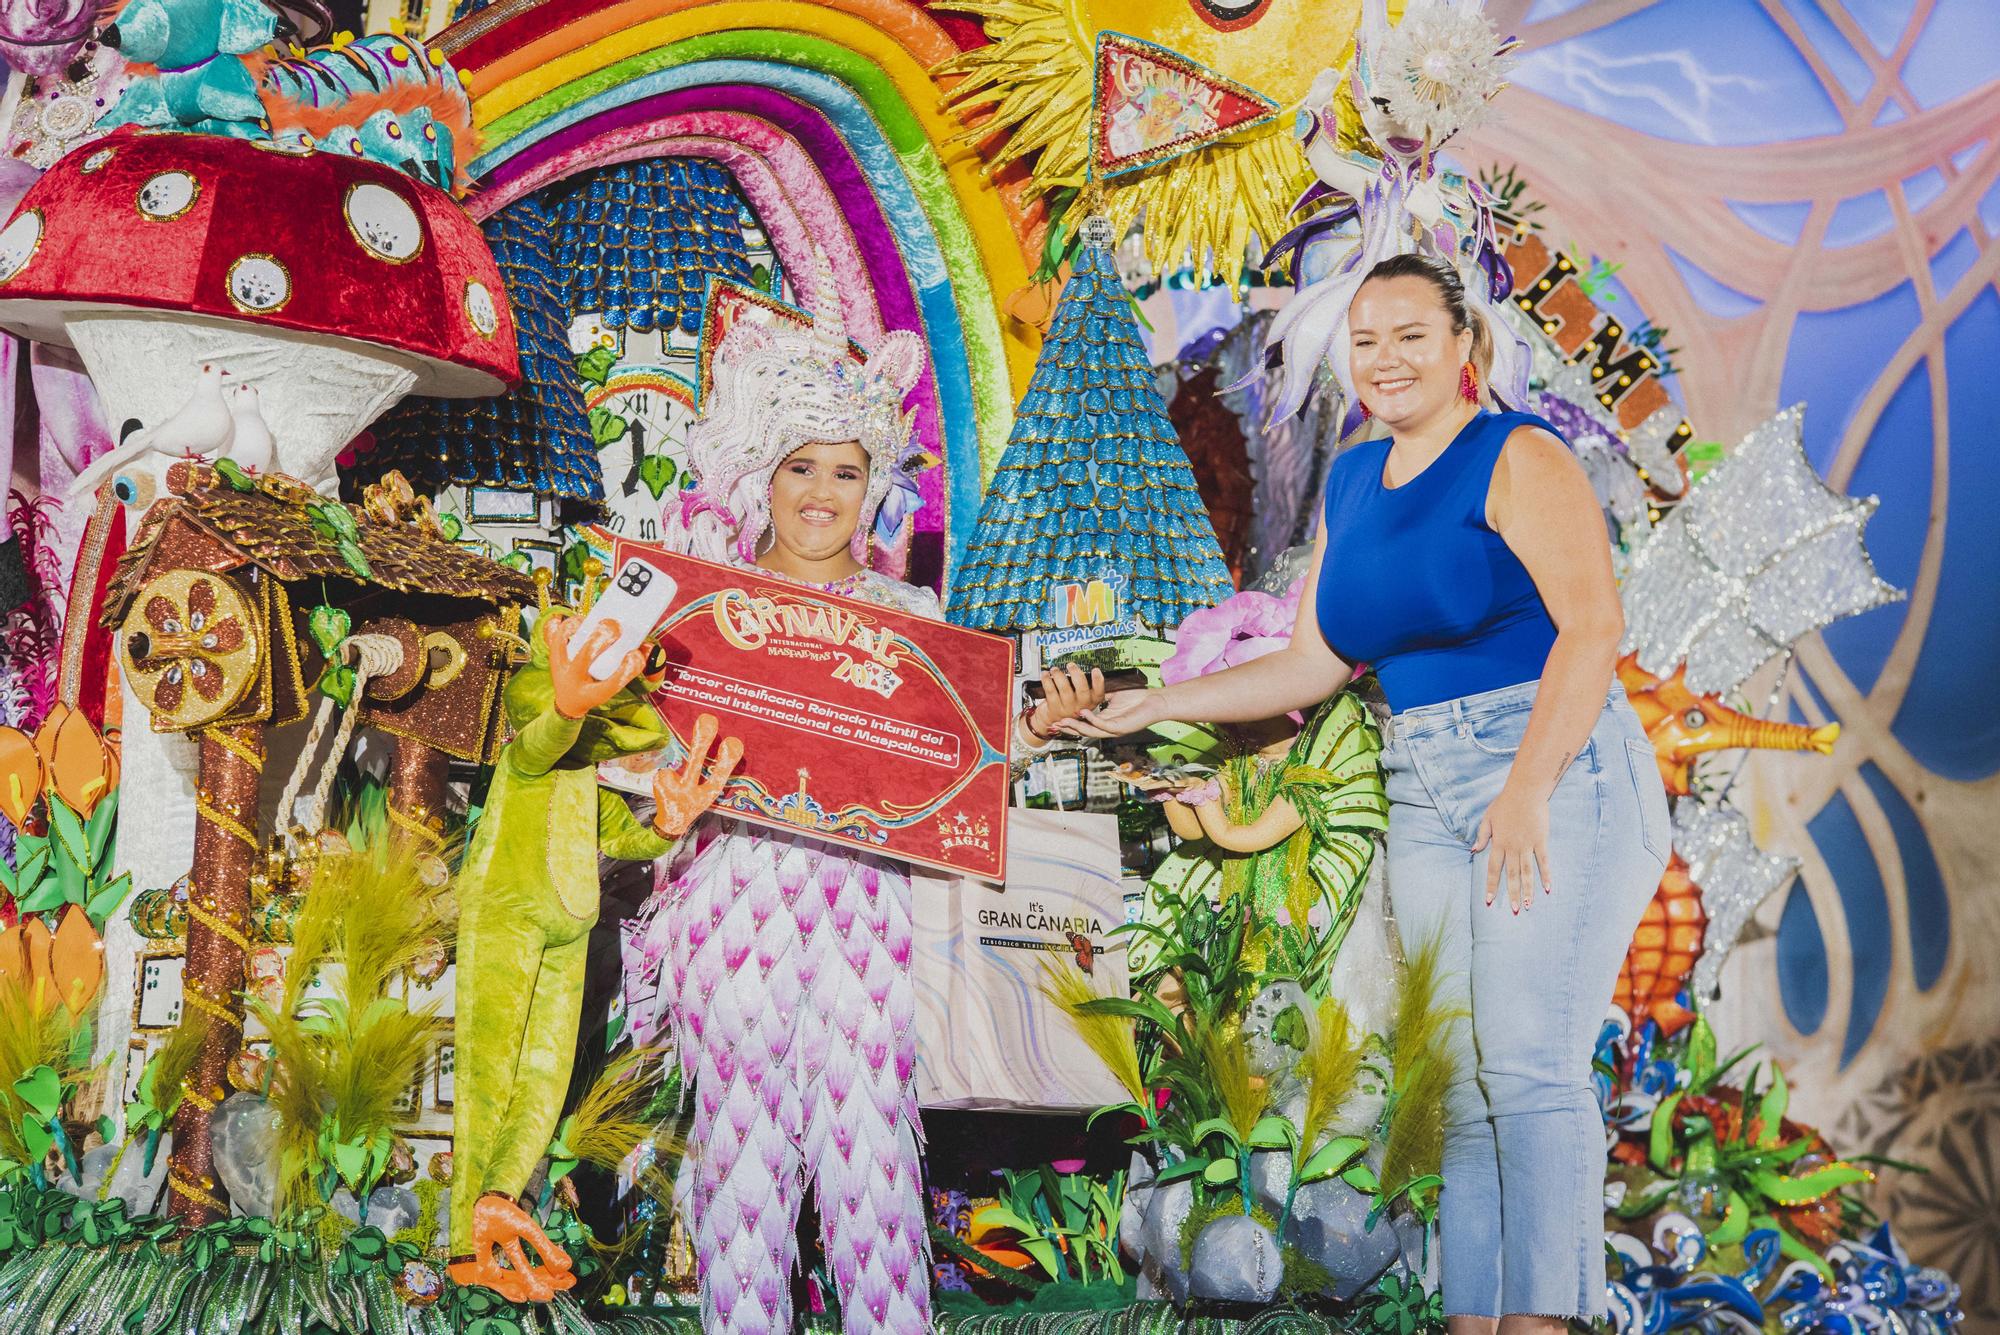 El carnaval internacional de Maspalomas 2022 de La Magia ya tiene Reina Infantil, Dalia Martín Almeida